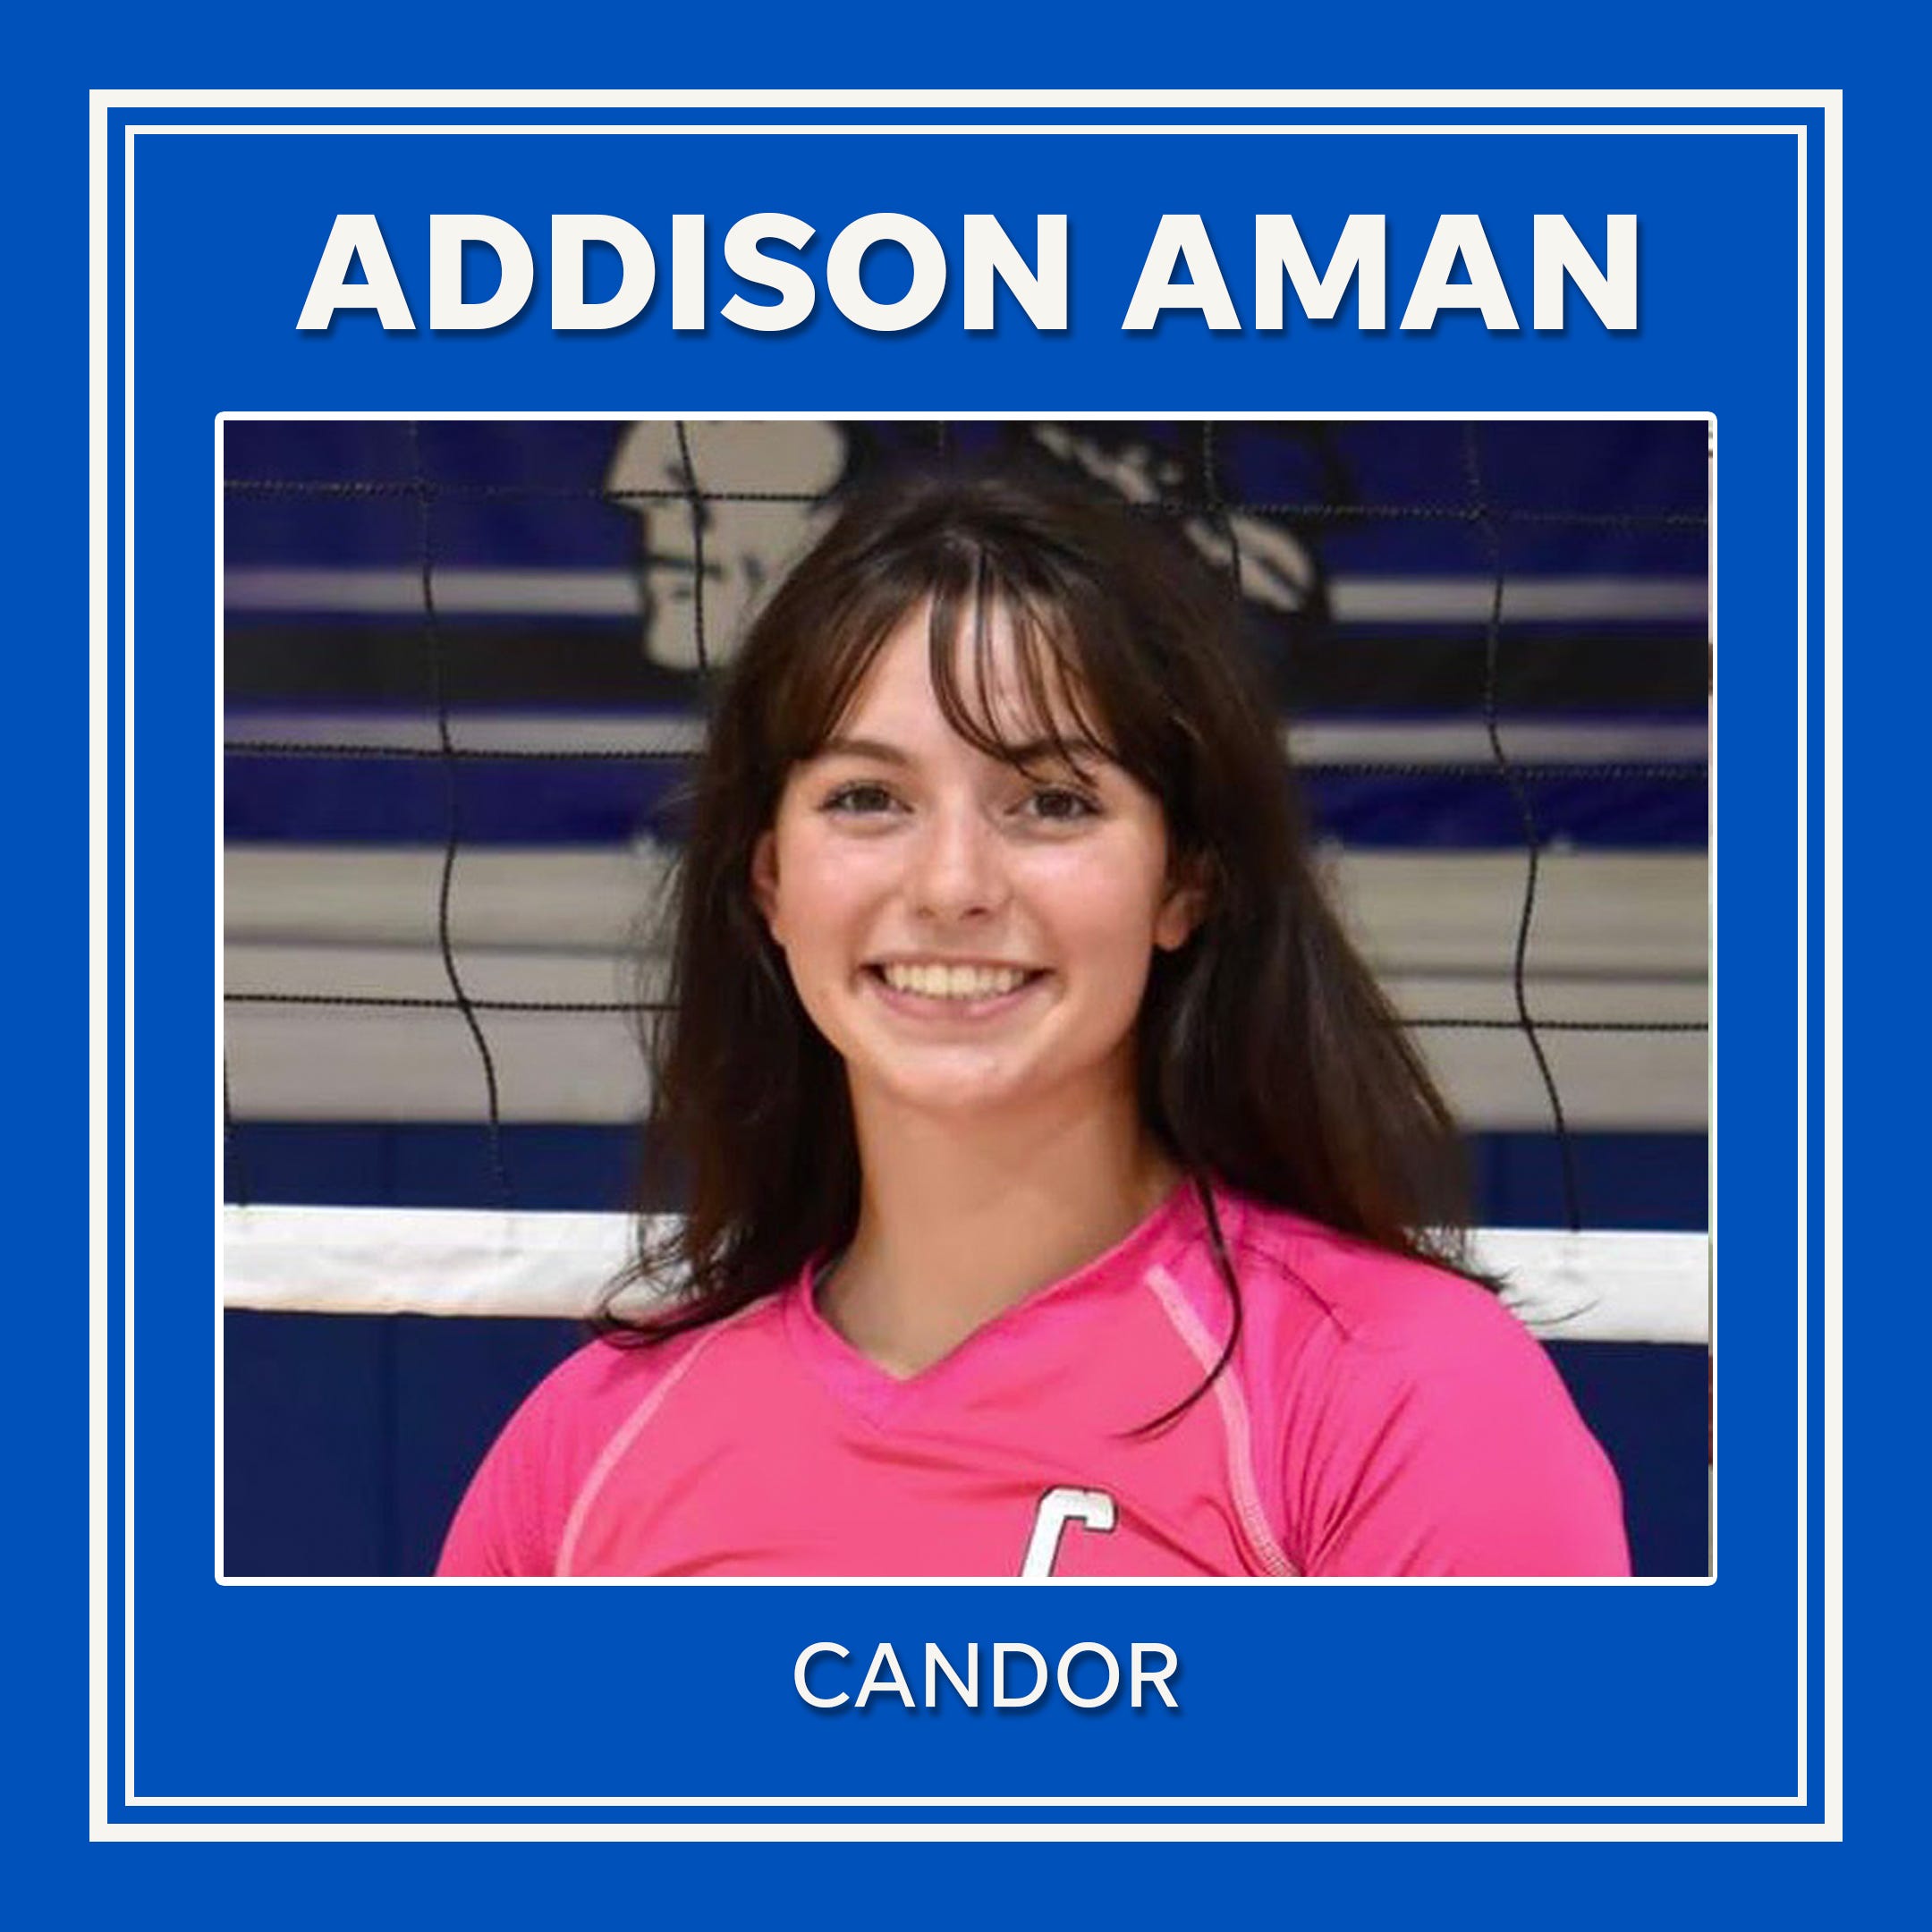 Addison Aman